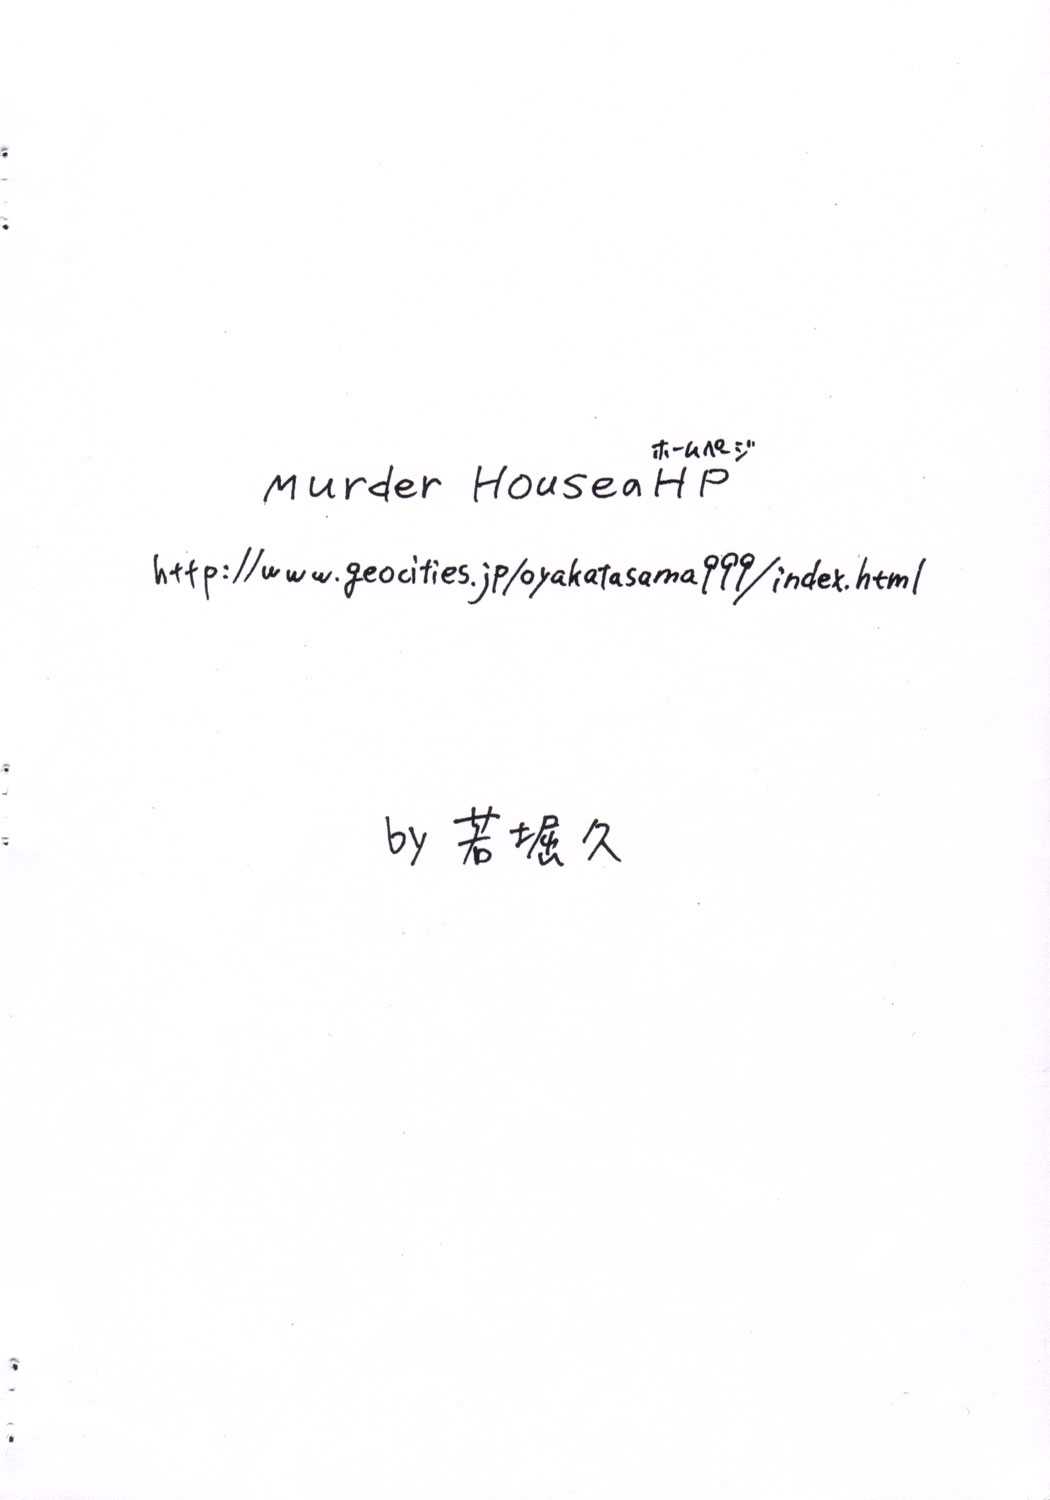 [MURDER HOUSE] kira maryu (Gundam Seed) [MURDER HOUSE] キラマリュ (機動戦士ガンダムSEED)